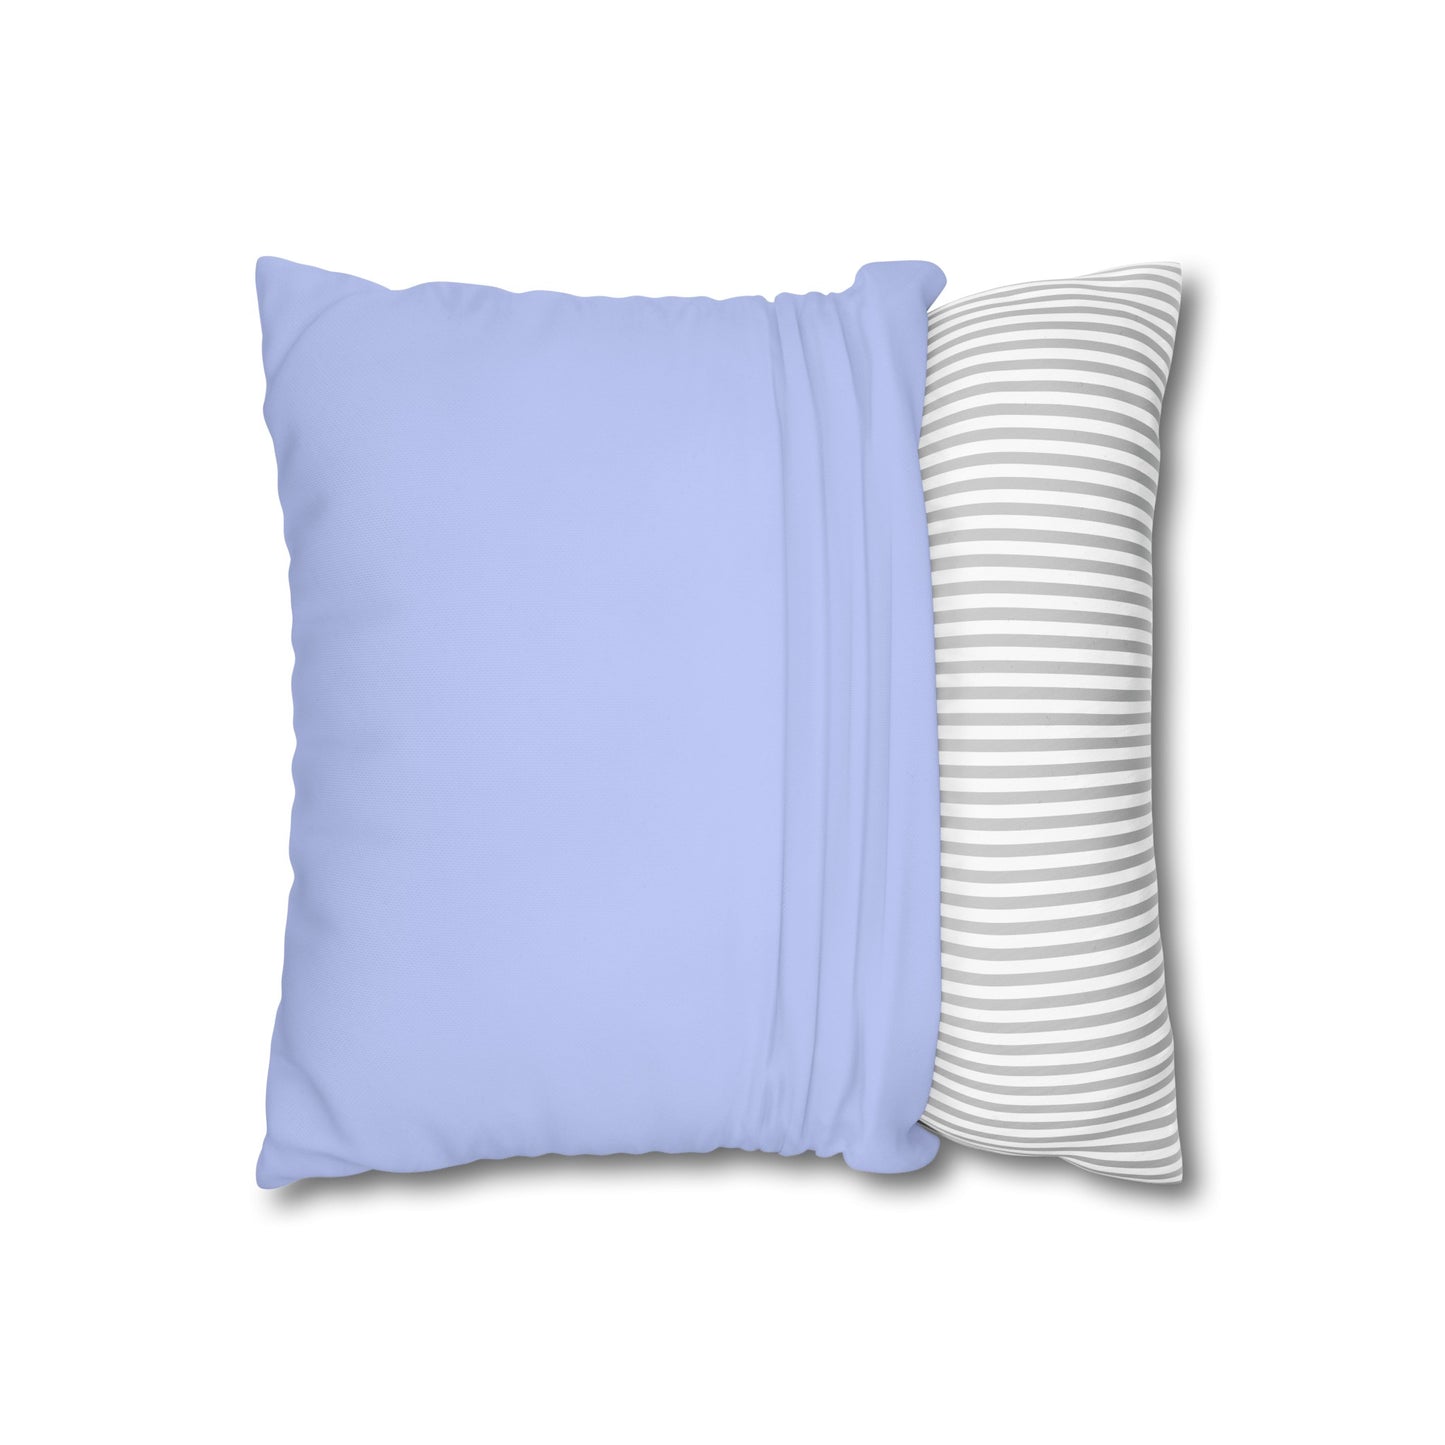 Pink & Blue Hydrangea #1 Cushion Cover